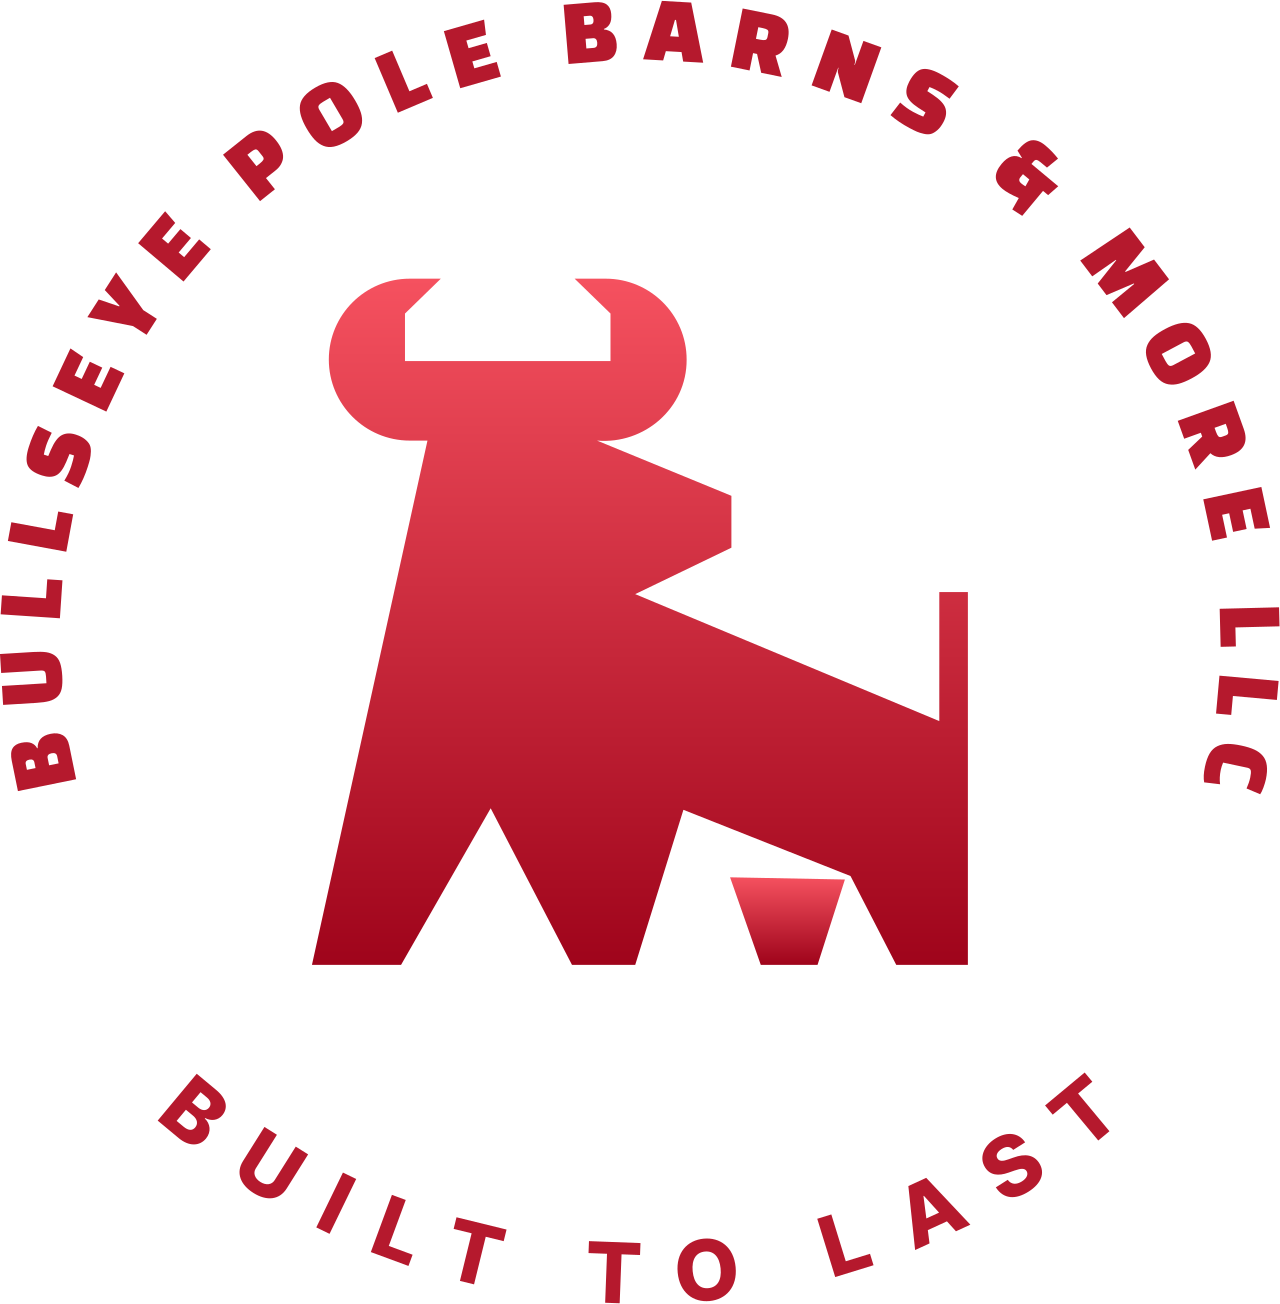 BULLSEYE POLE BARNS & MORE LLC's logo